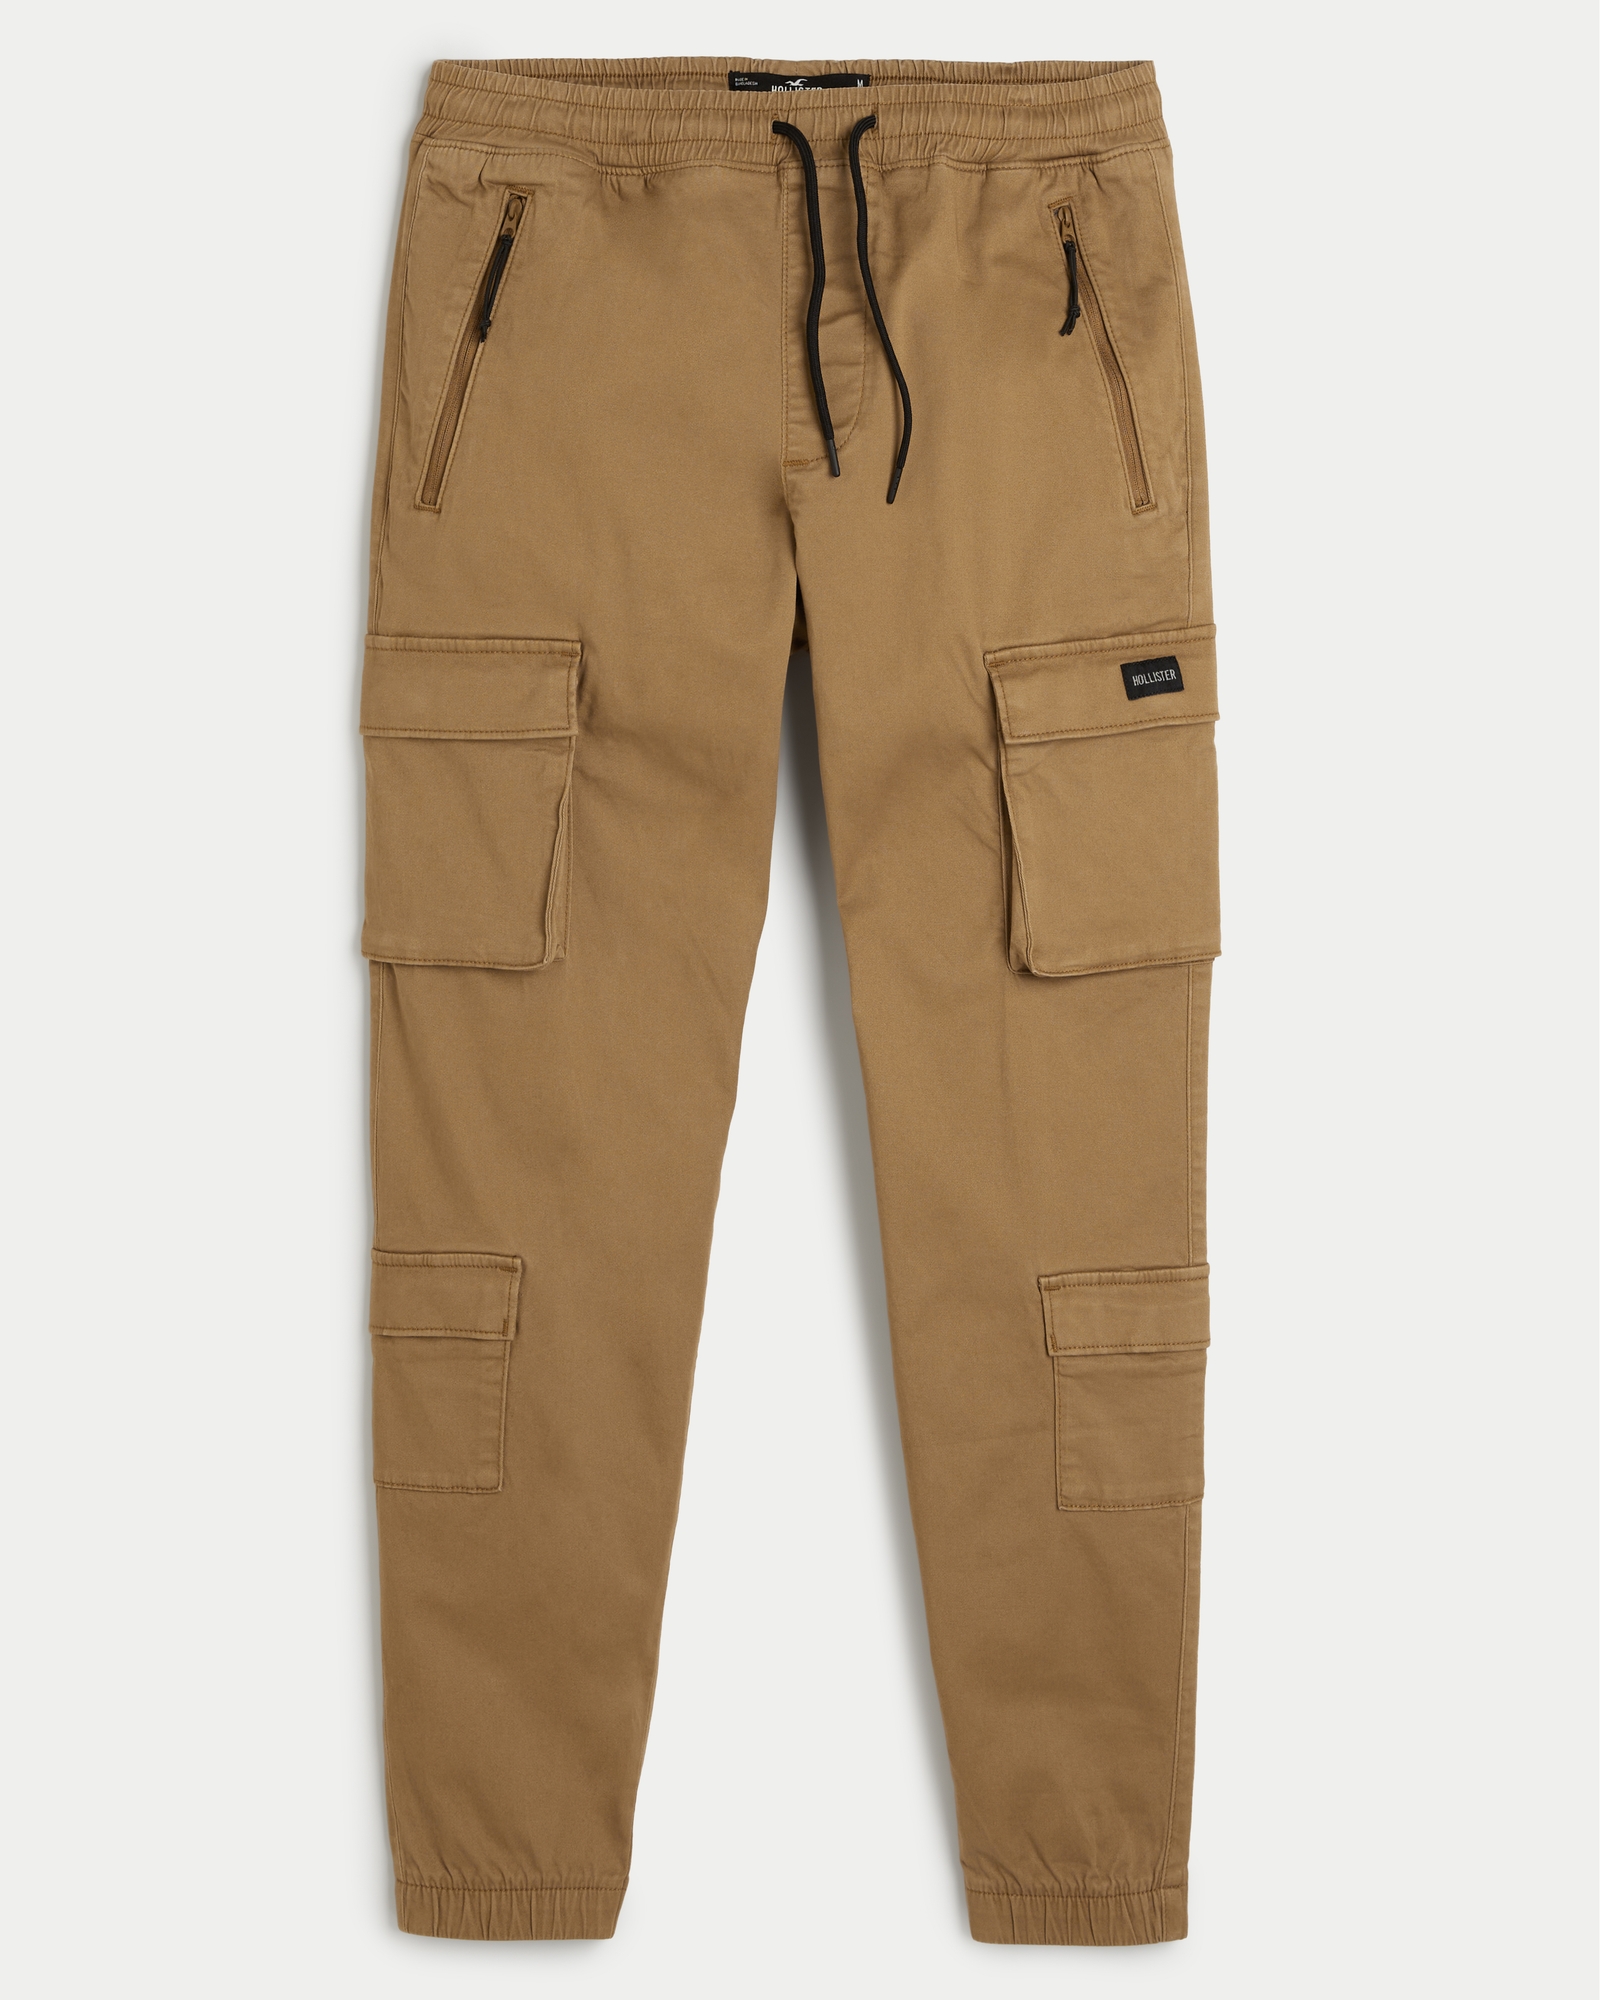 Hollister Sweatpants Size Medium Gray Blue Joggers Drawstring Zipper  Pockets